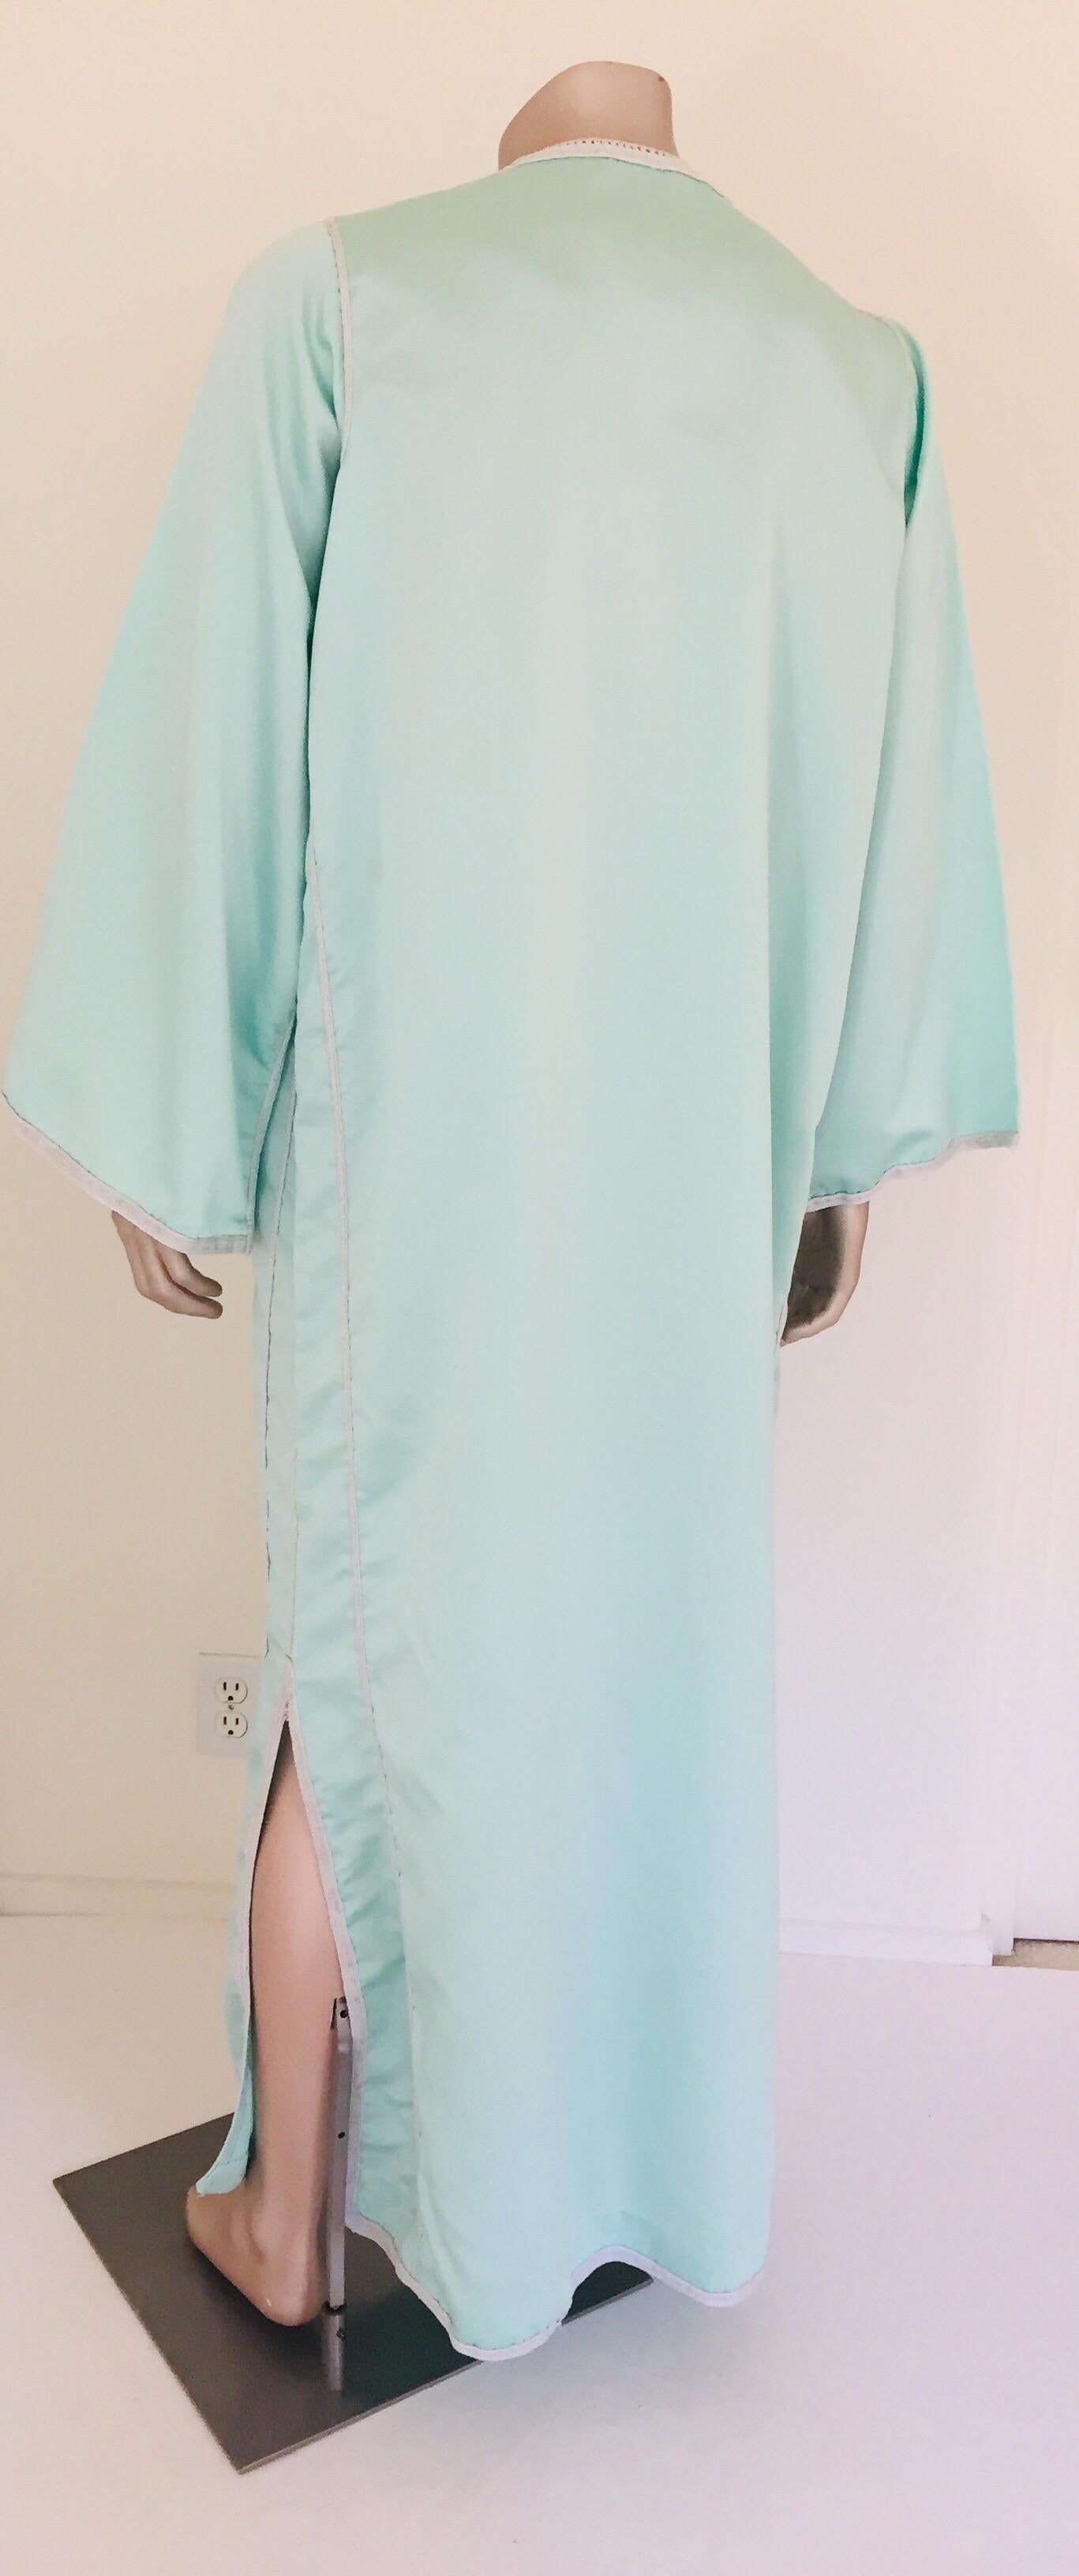 Moorish Turquoise Blue 1970s Maxi Dress Caftan For Sale 10